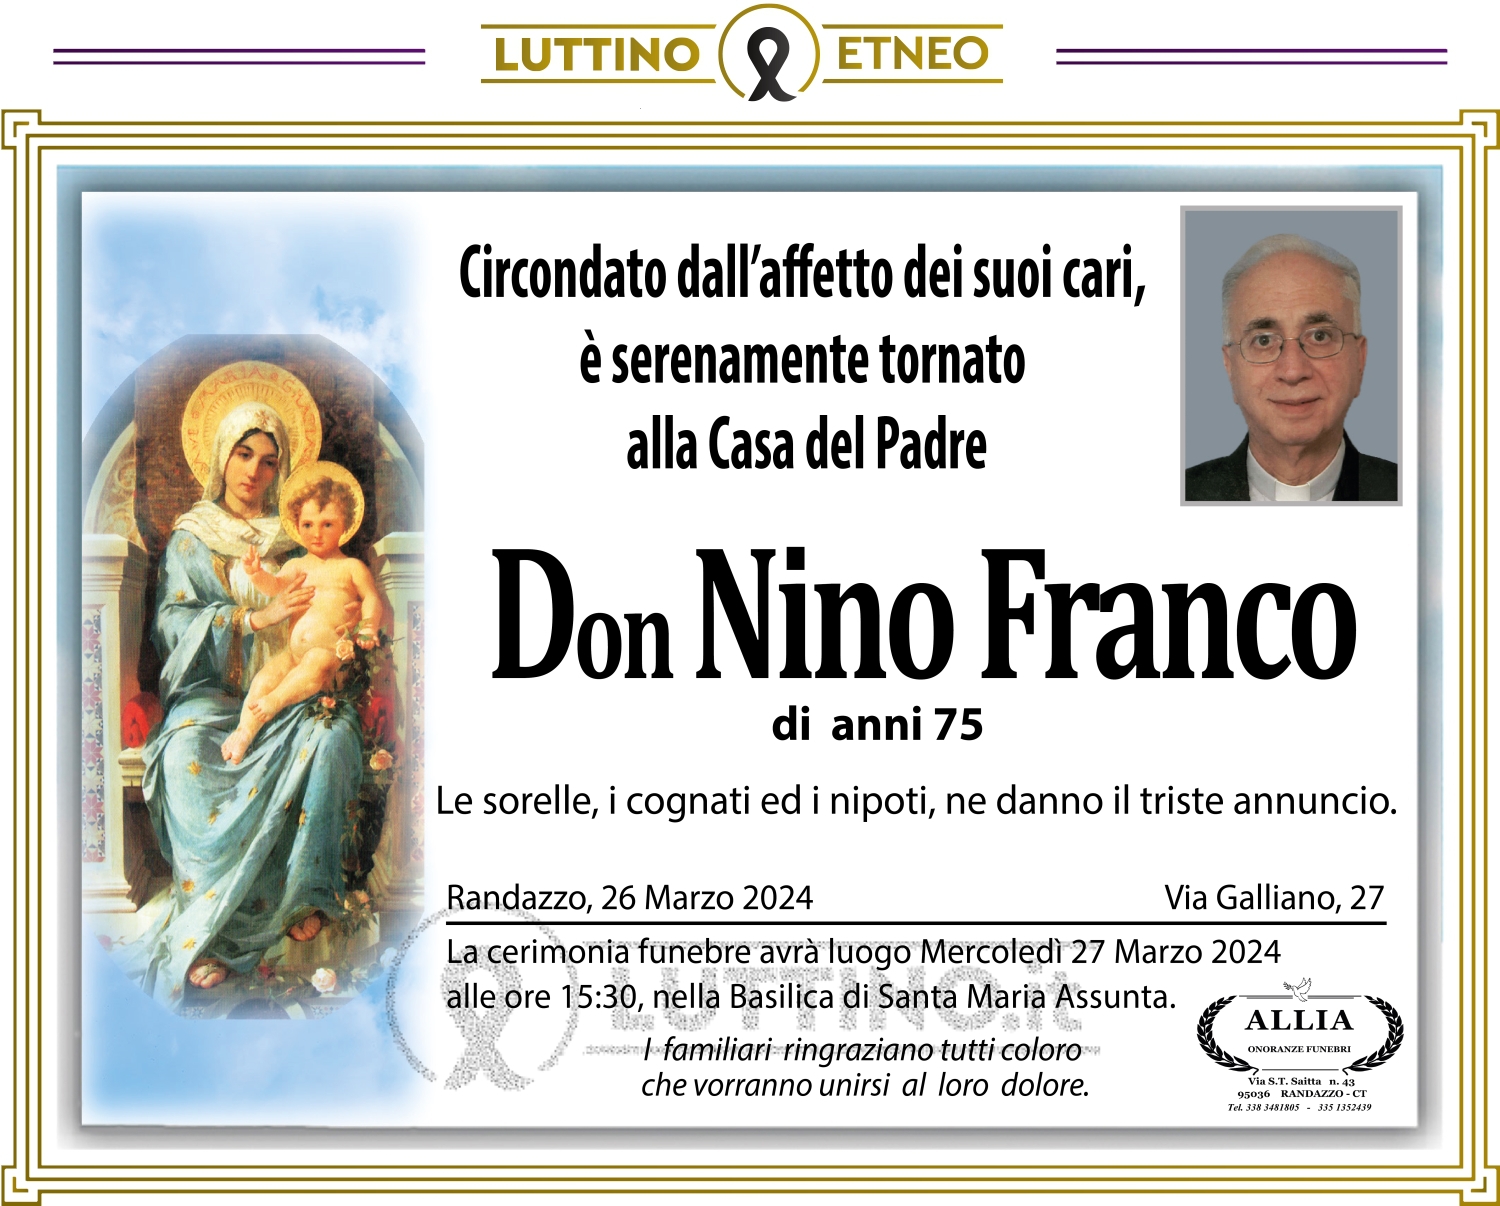 Don Nino Franco